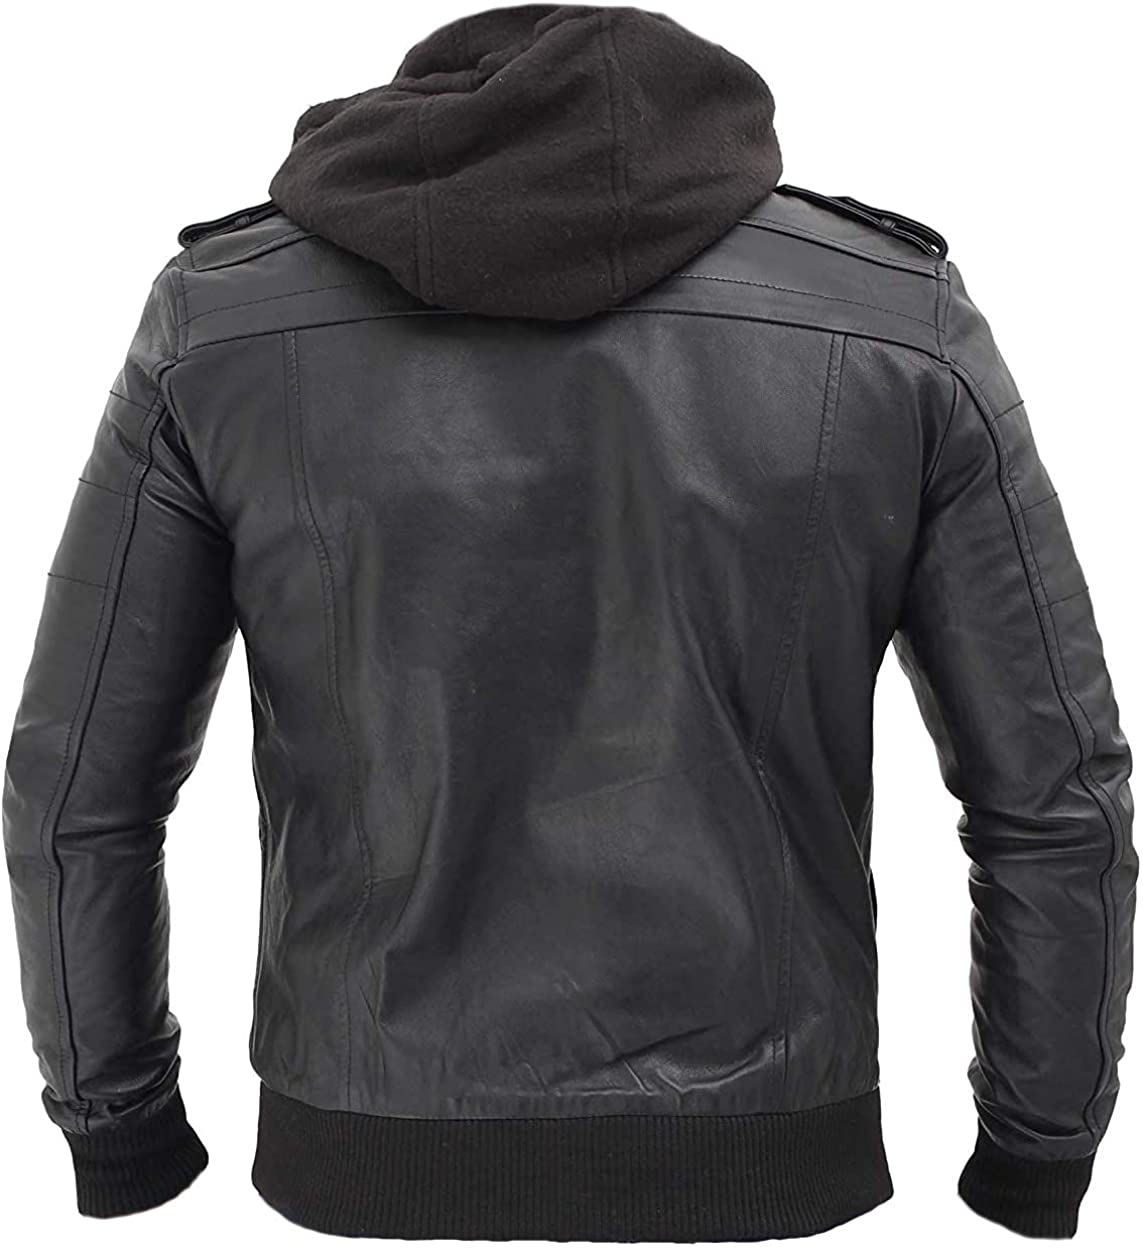 Men's Black Biker Style Leather Bomber Jacket With Hood